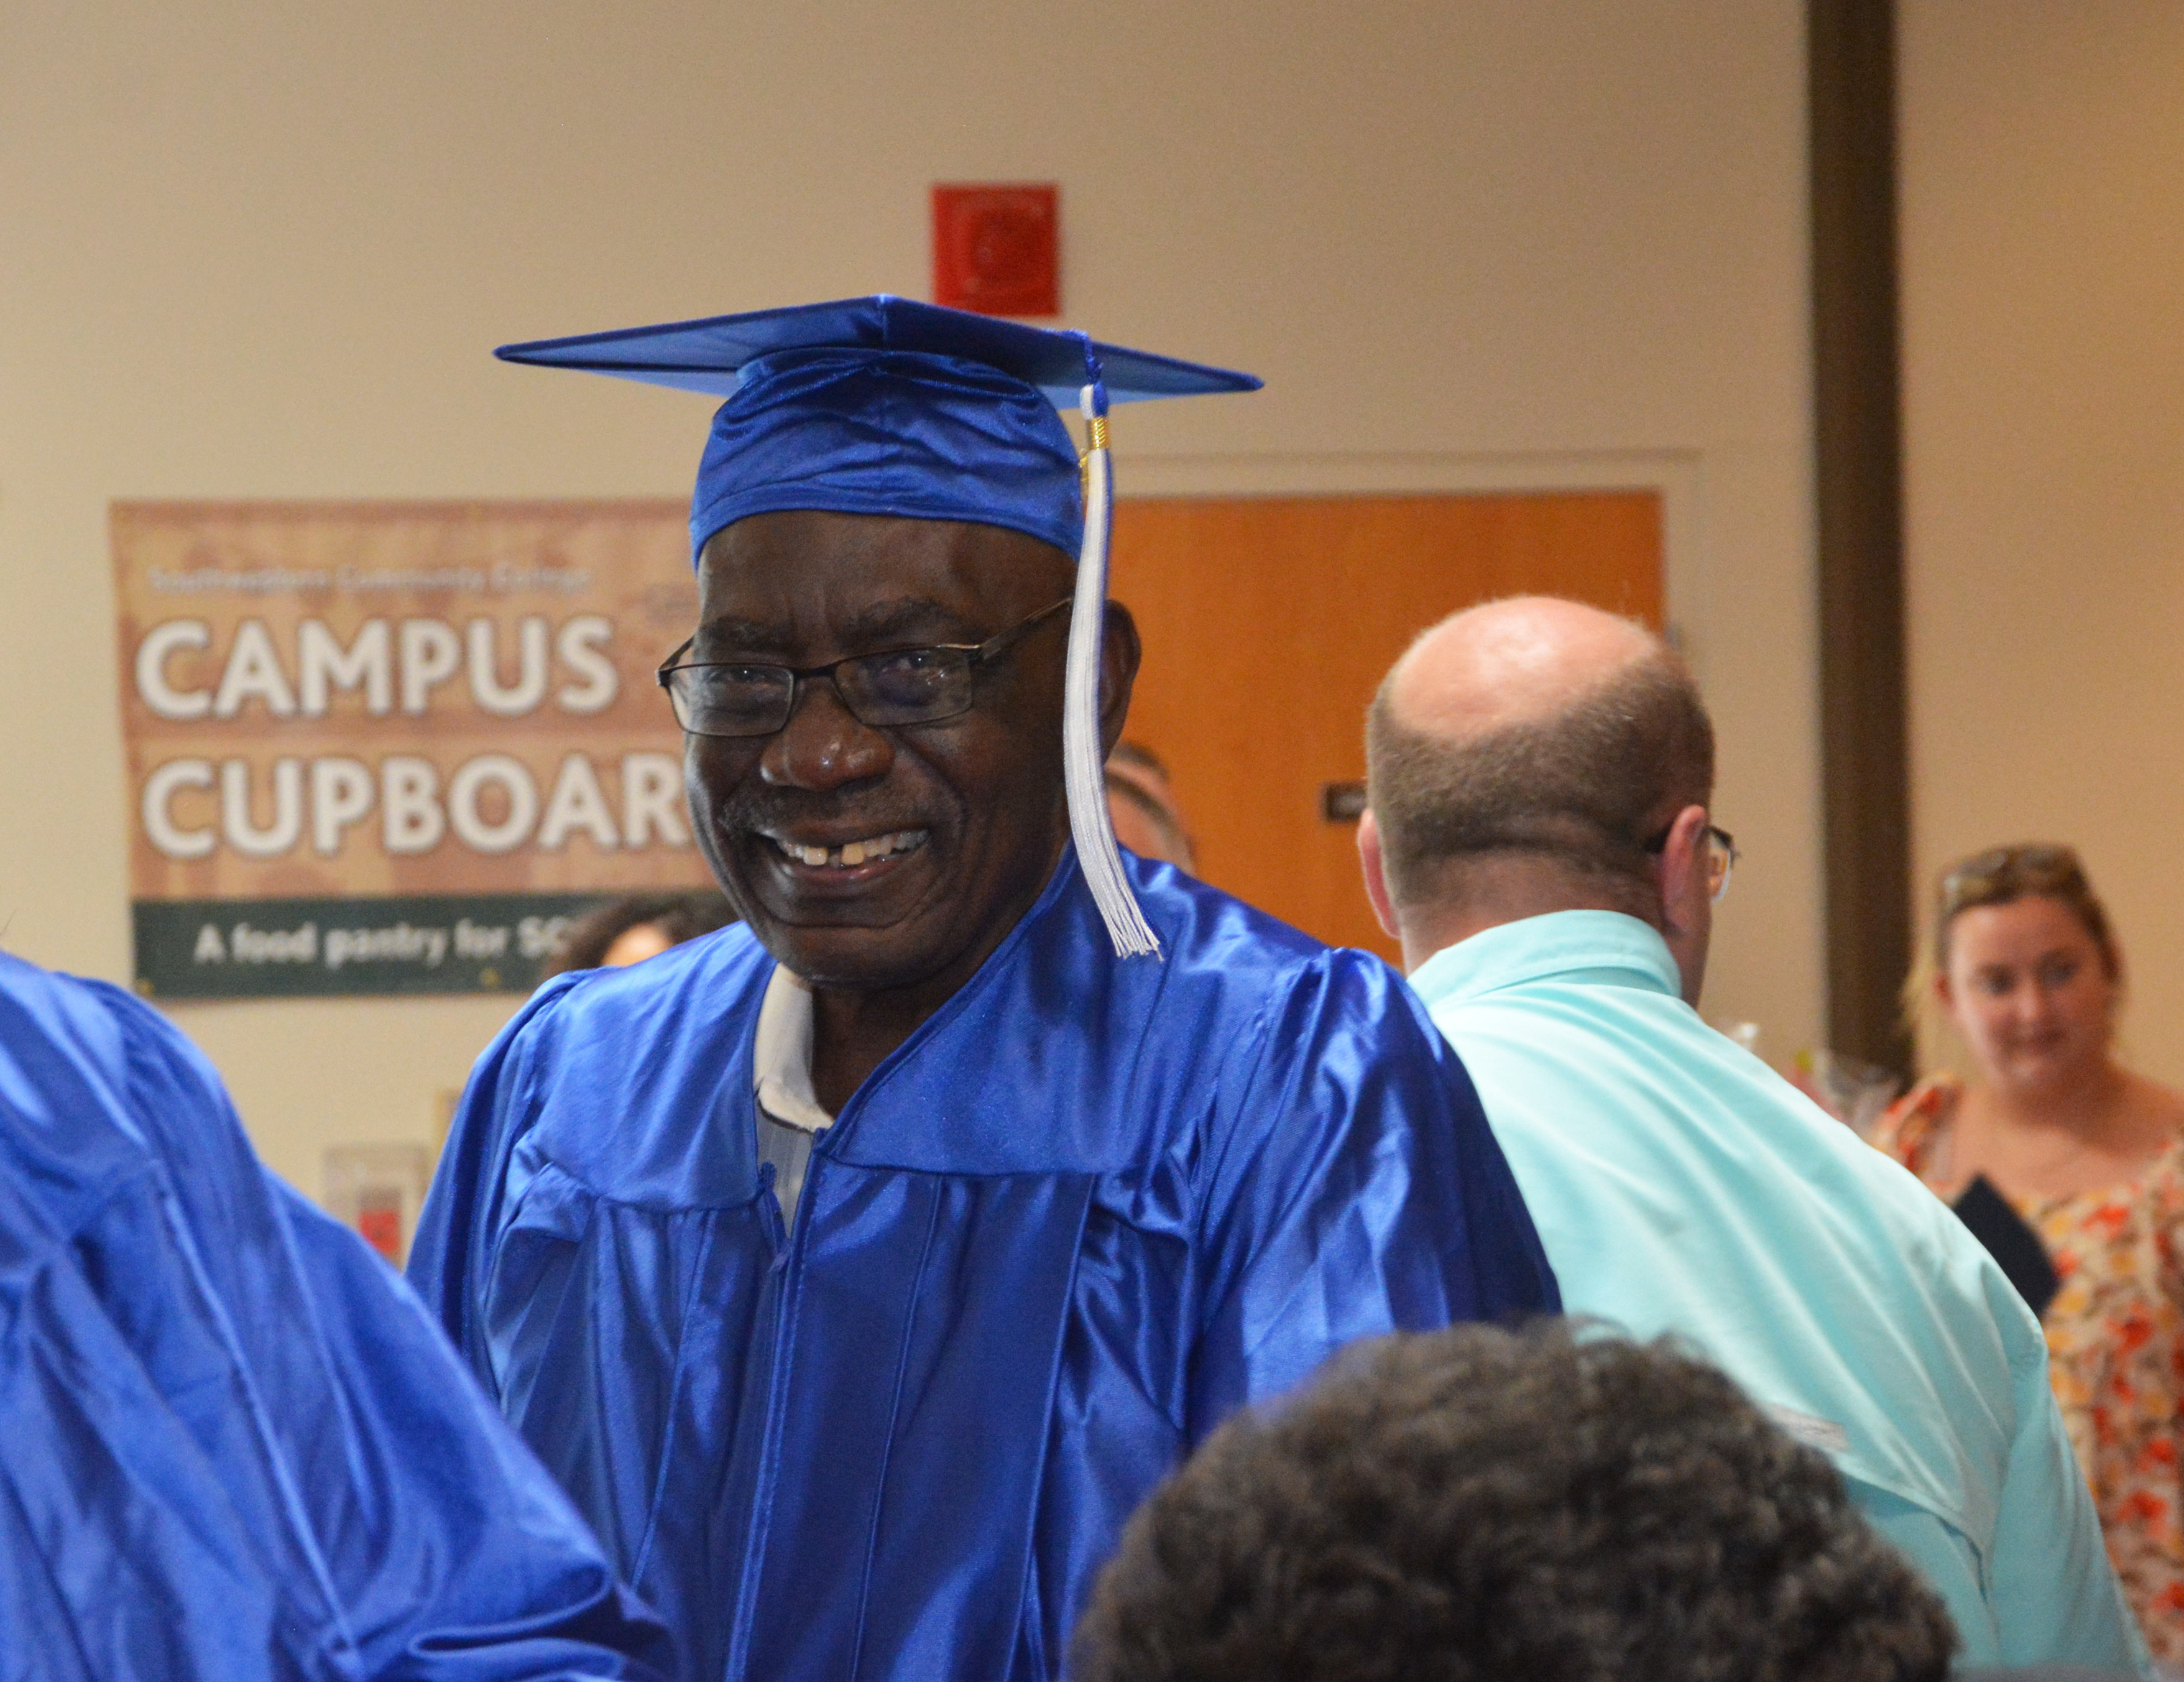 Calbert Christian smiles wearing blue graduation cap and gown